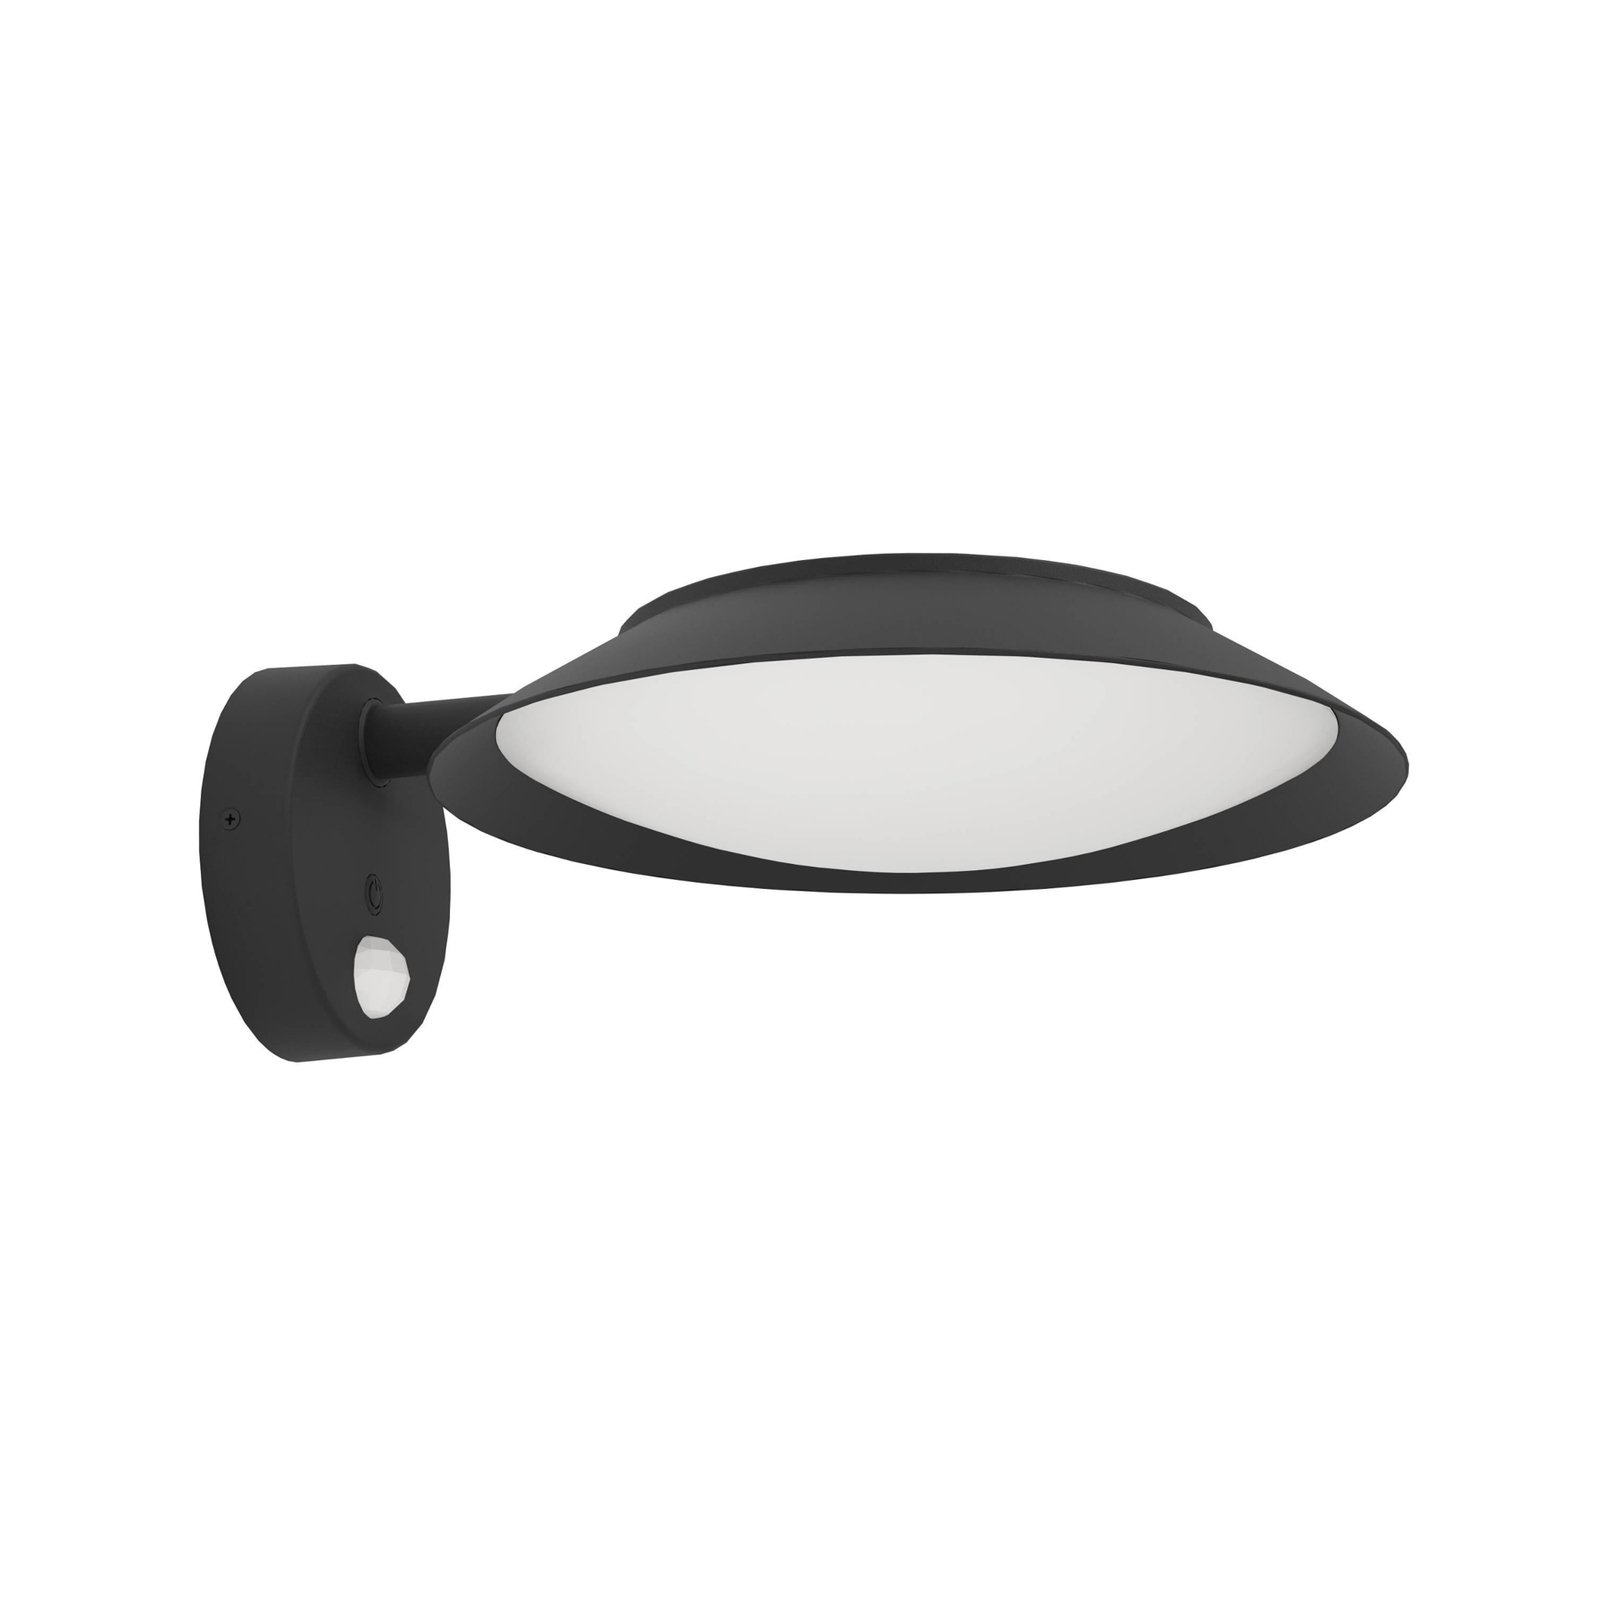 LED-vägglampa Cerrisi, bredd 10,5 cm, svart, sensor